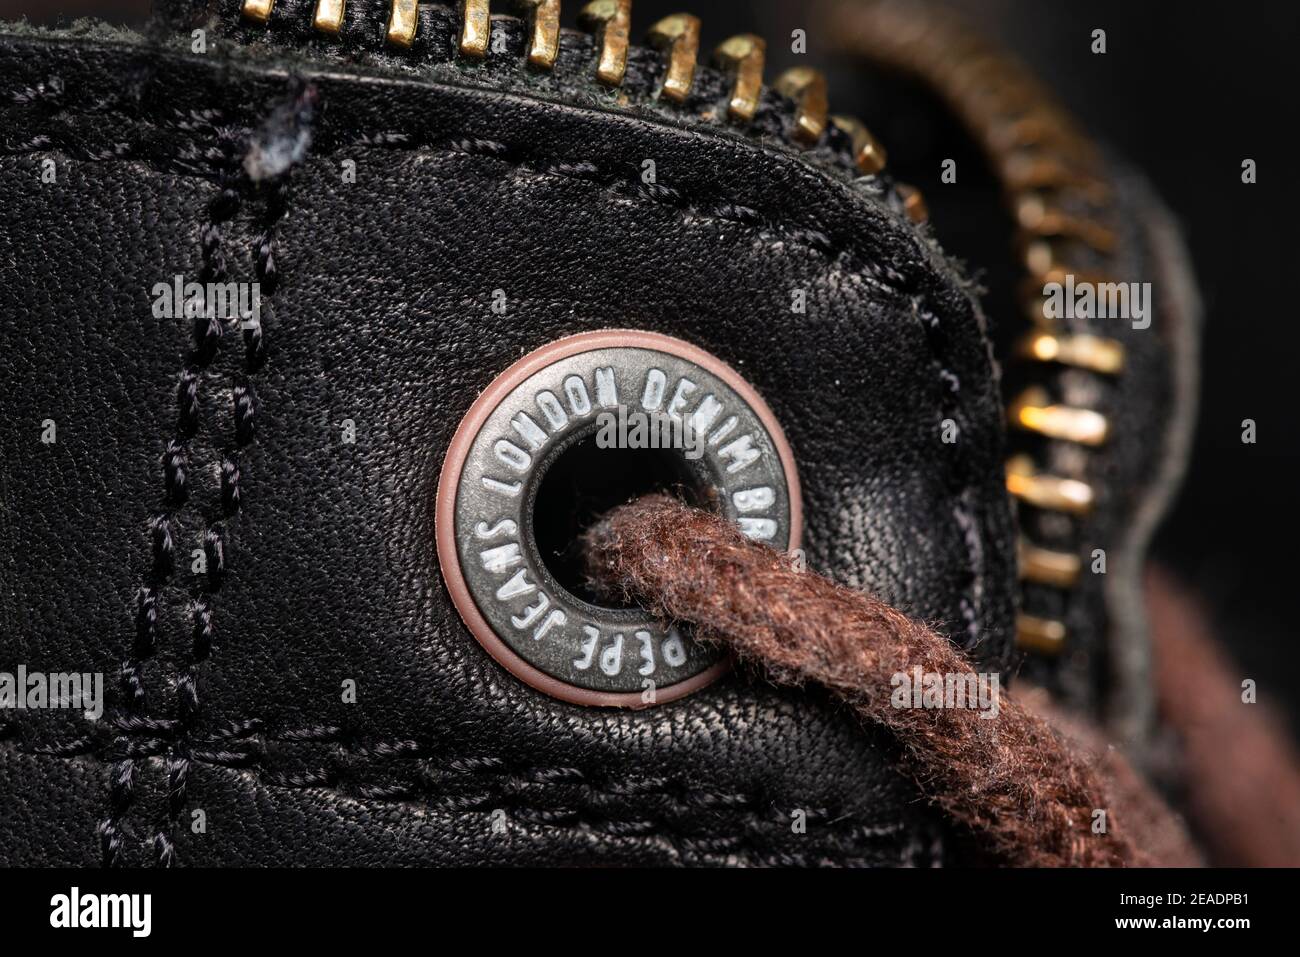 Pepe Jeans London Denim Brand Schriftzug auf Schuhöse Schwarze Leder Herrenstiefel Nahaufnahme Detail selektive Fokus Stockfoto